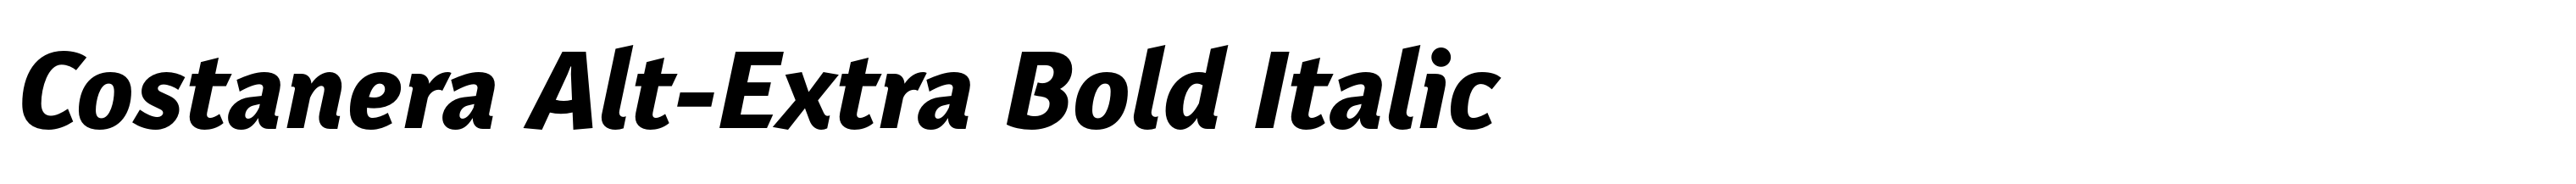 Costanera Alt-Extra Bold Italic